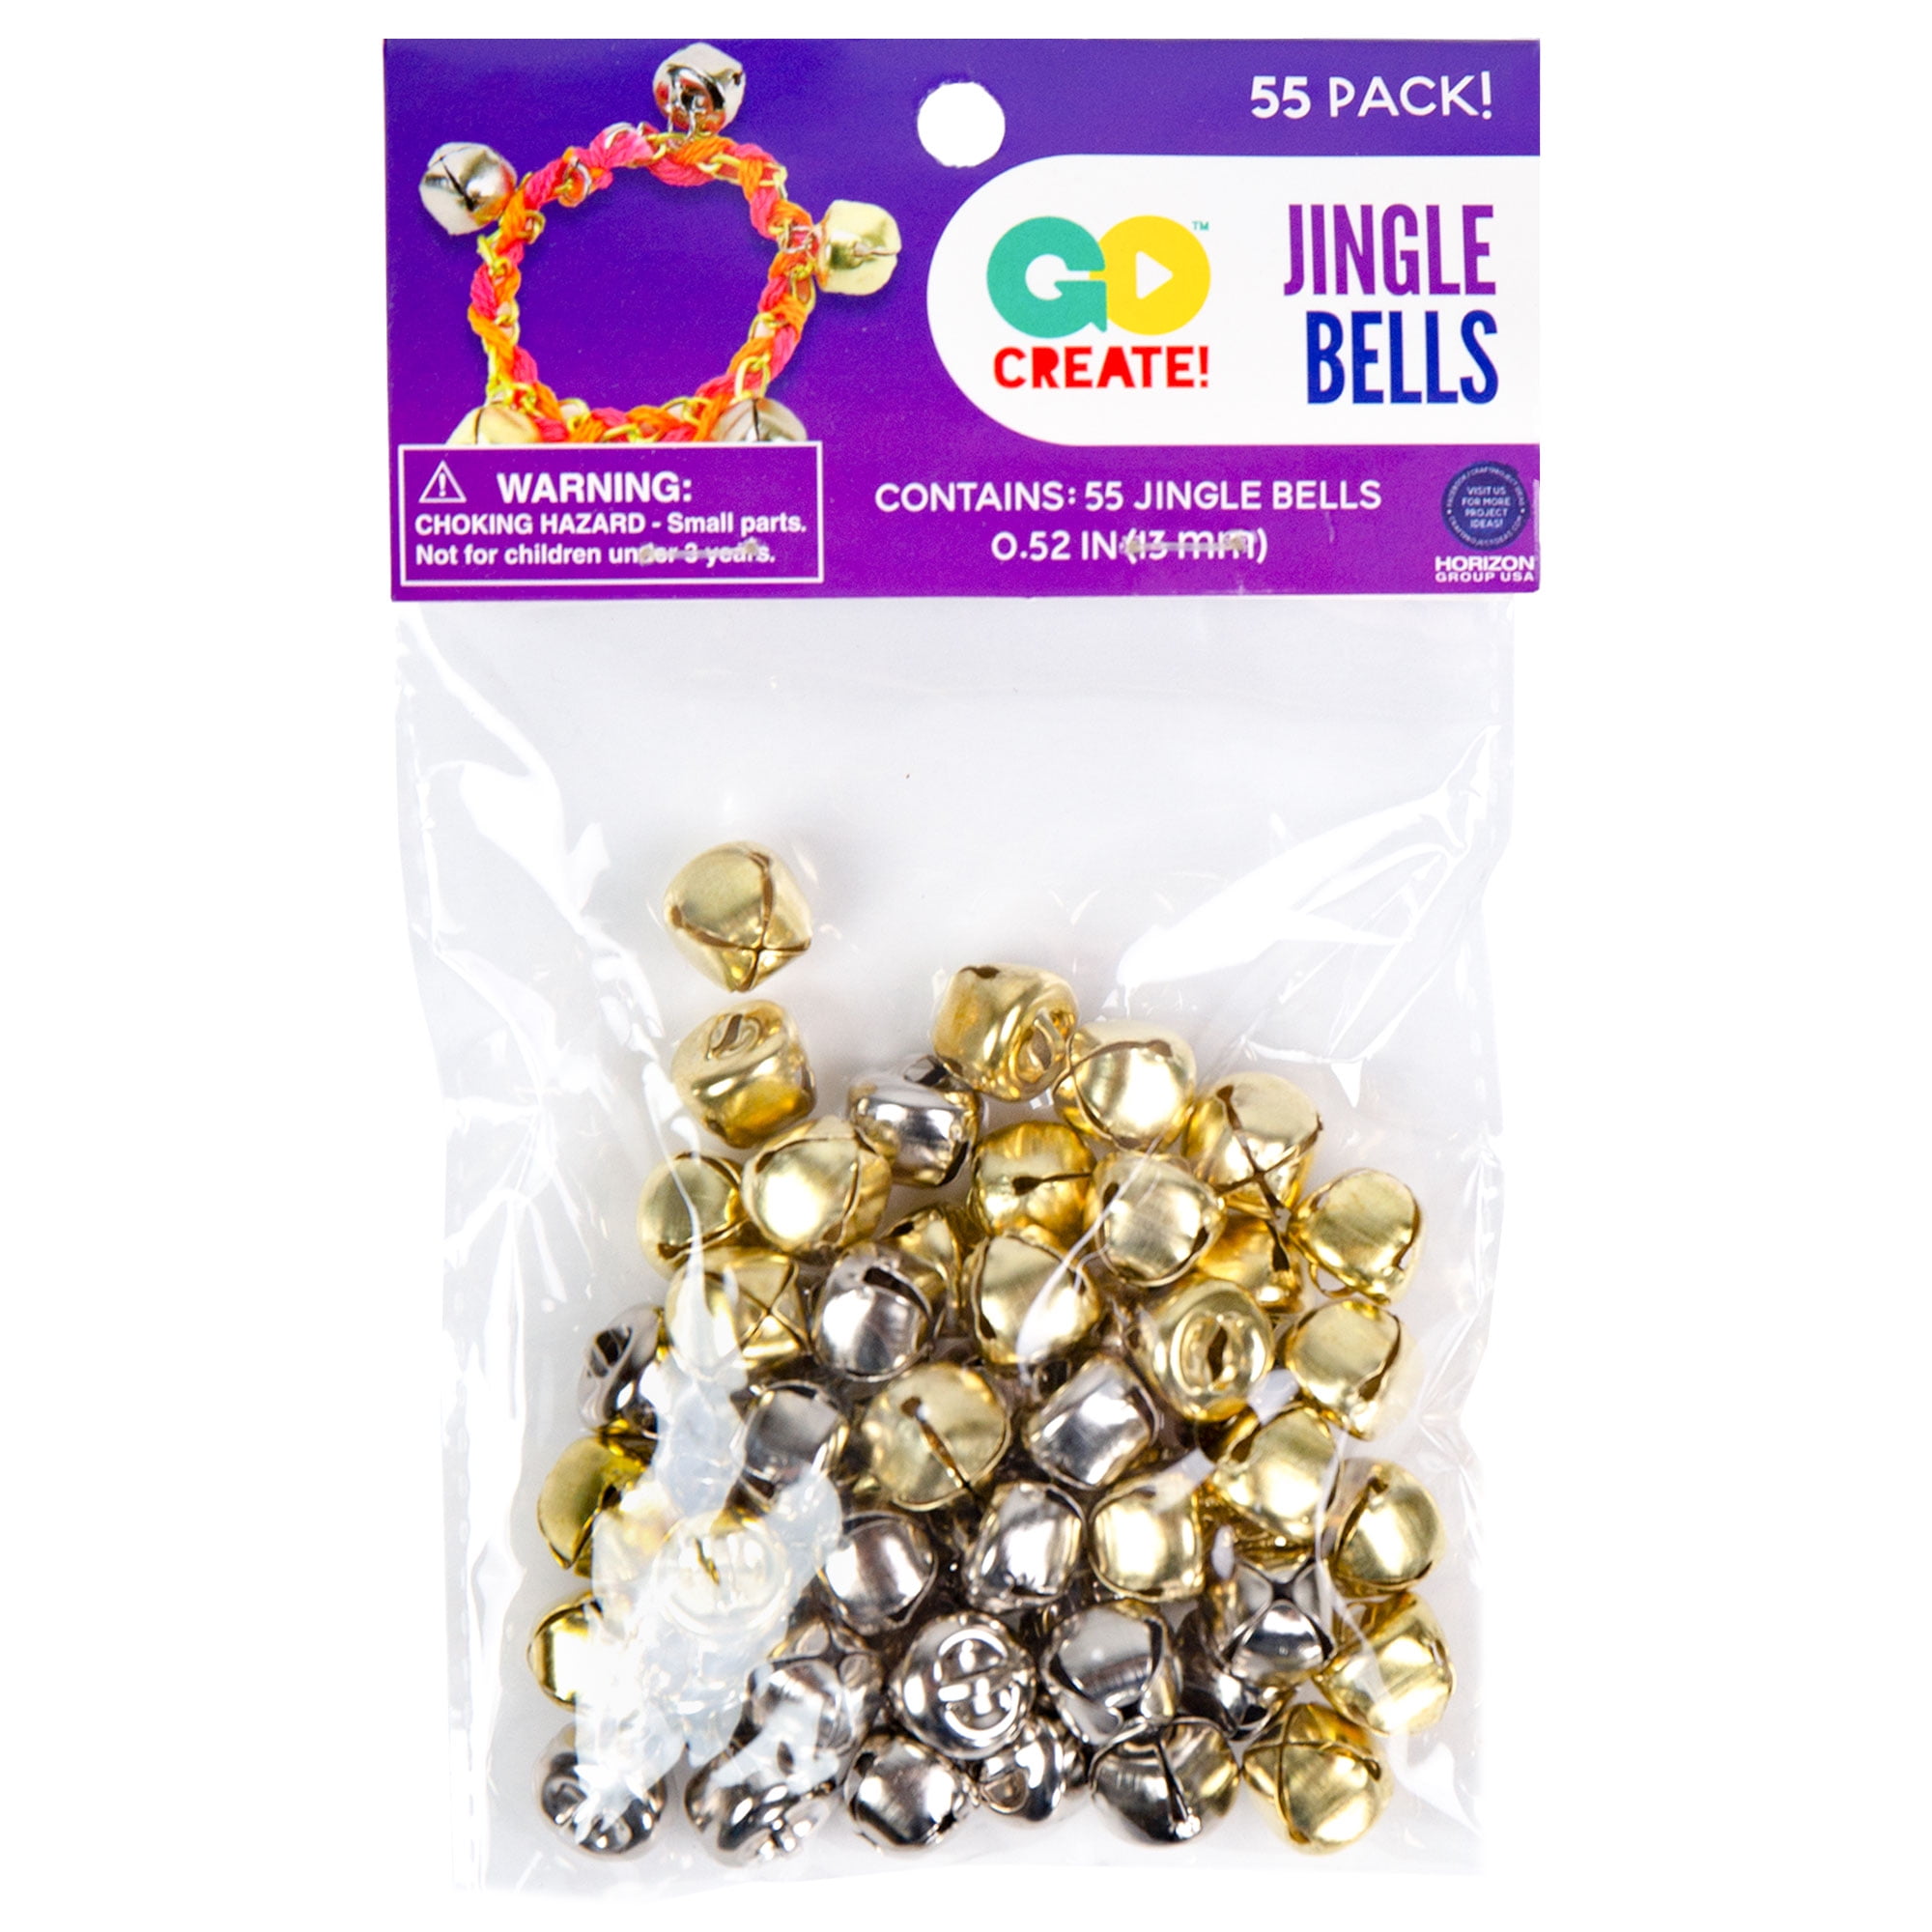 2020 Hand held Bells Call tea jingle Bells Build Ringtones Christmas Musical Toy 